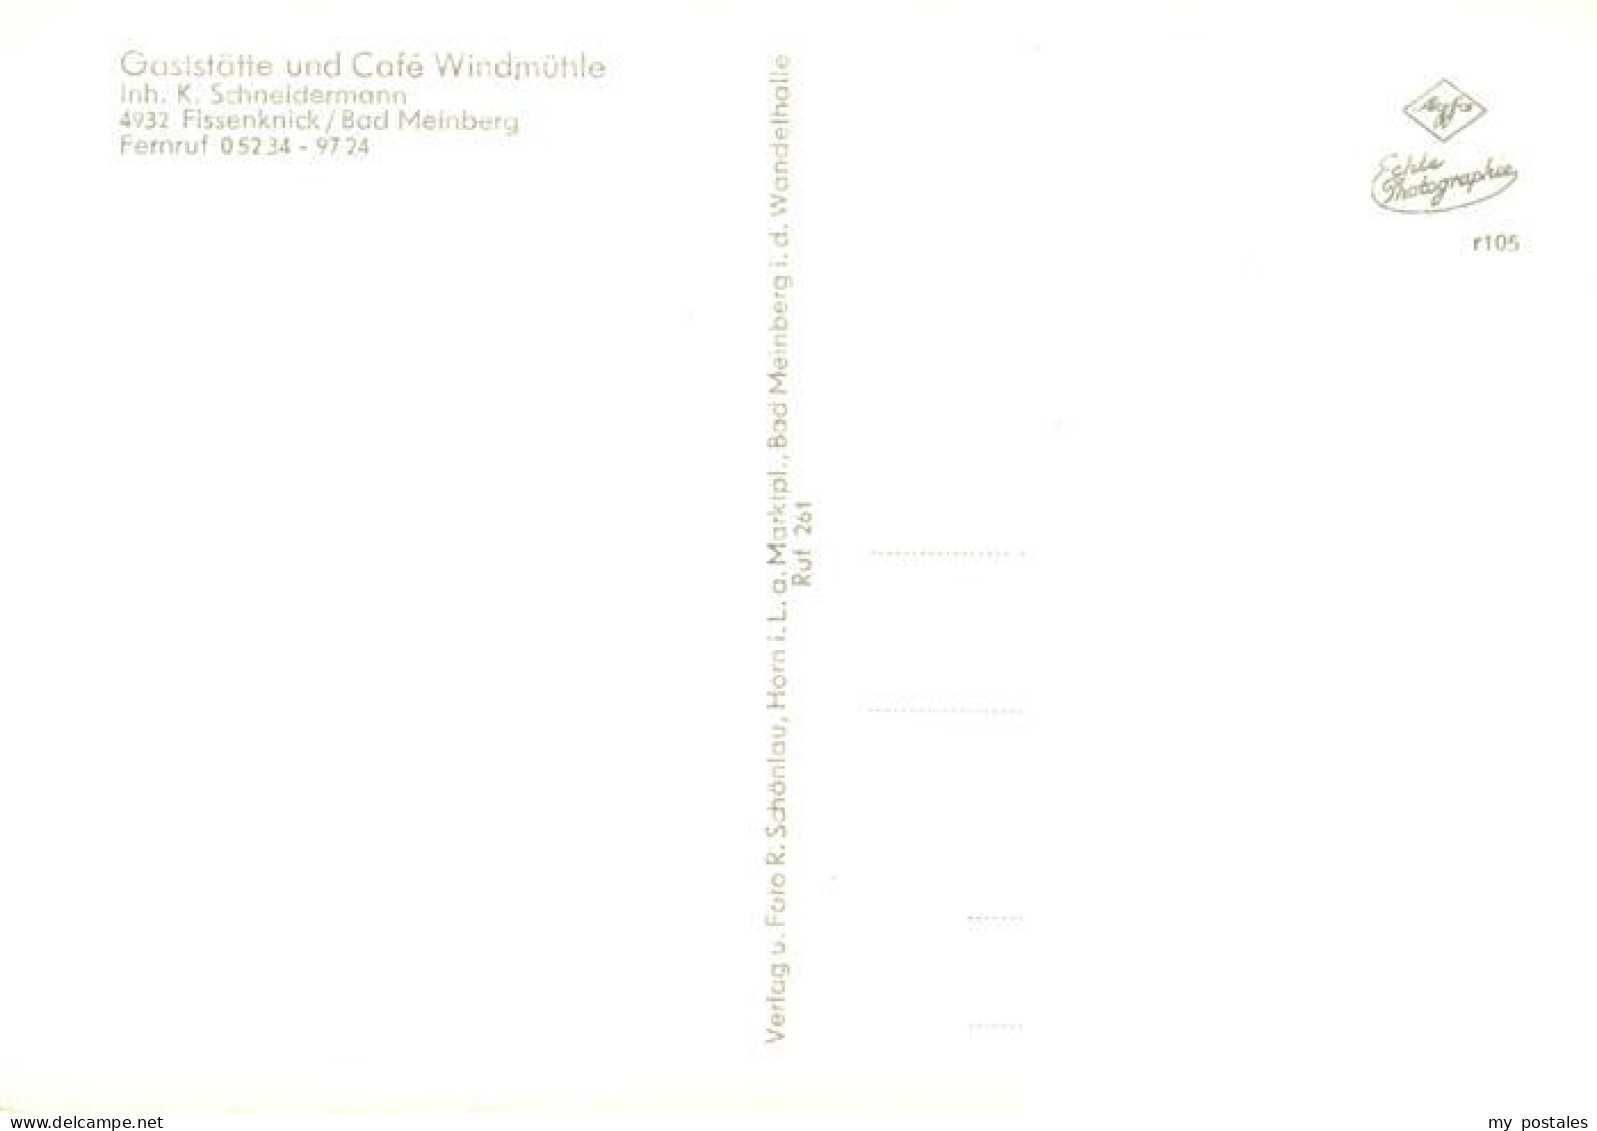 73896383 Fissenknick Horn-Bad Meinberg NRW Gaststaette Cafe Windmuehle - Bad Meinberg